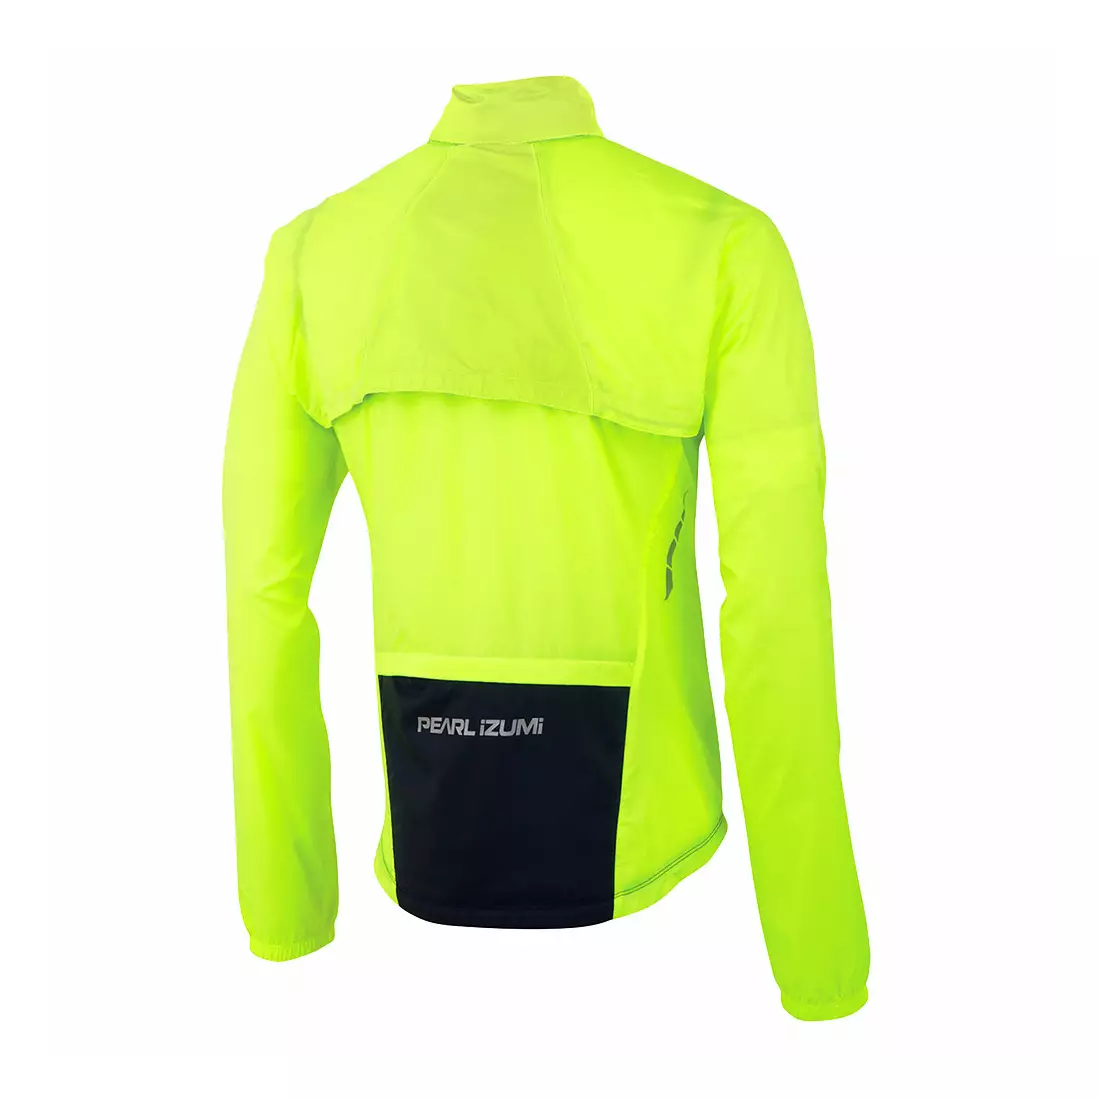 PEARL IZUMI ELITE Barrier Convertible men's cycling jacket 11131513-428, fluorine